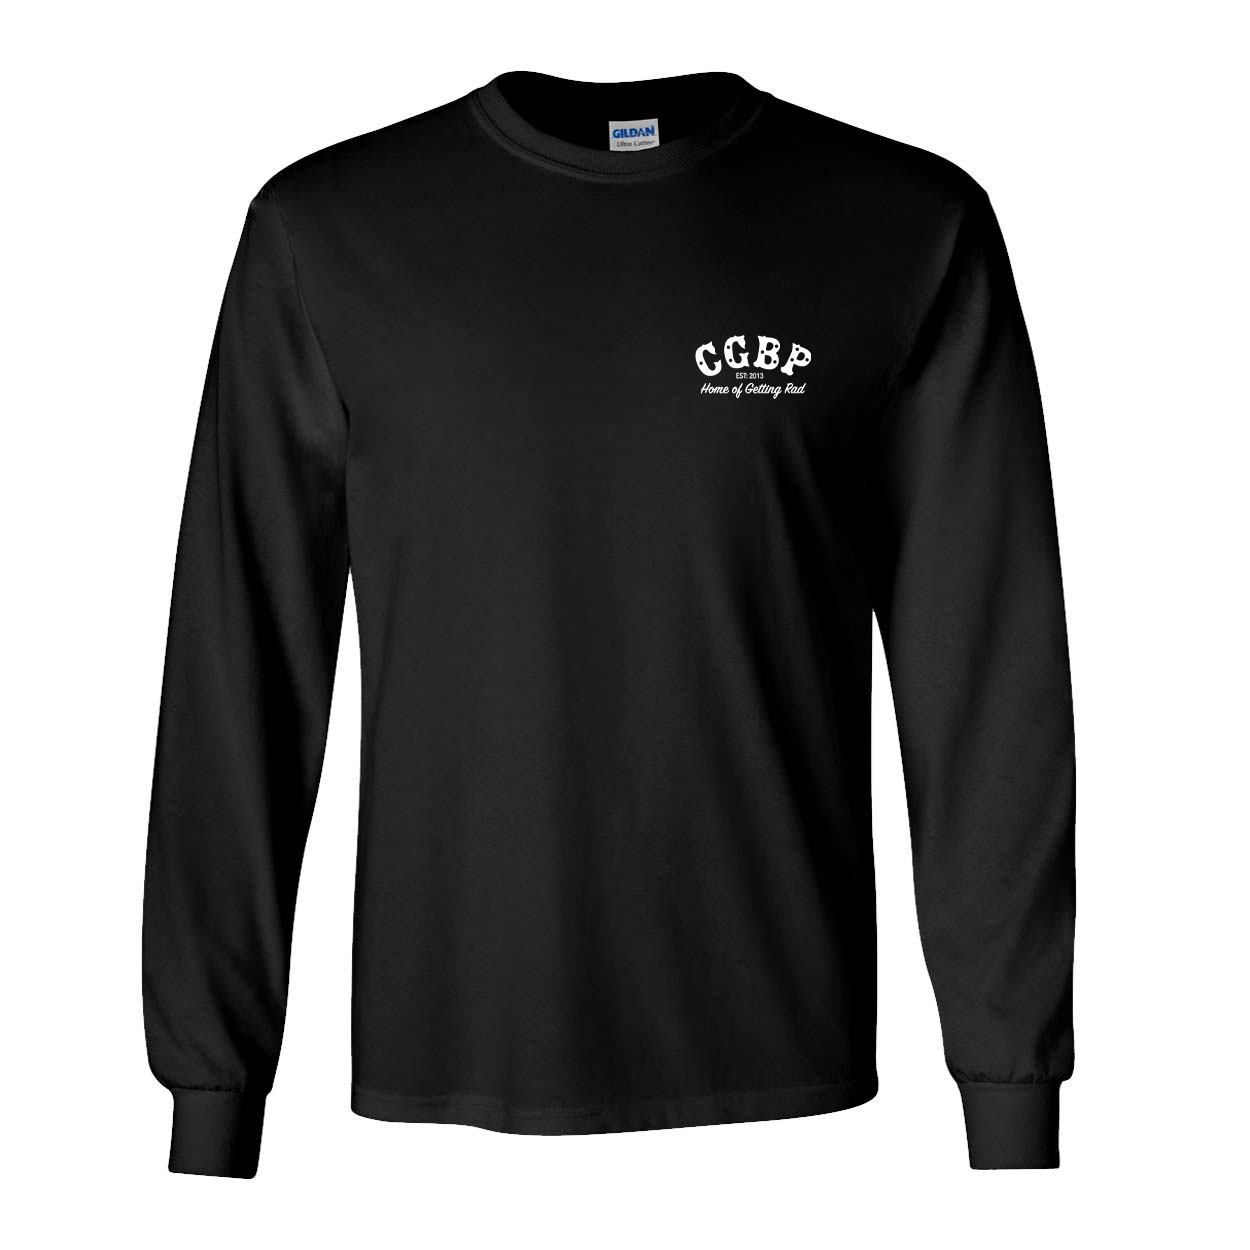 Cottage Grove Bike Park Night Out Long Sleeve T-Shirt Black